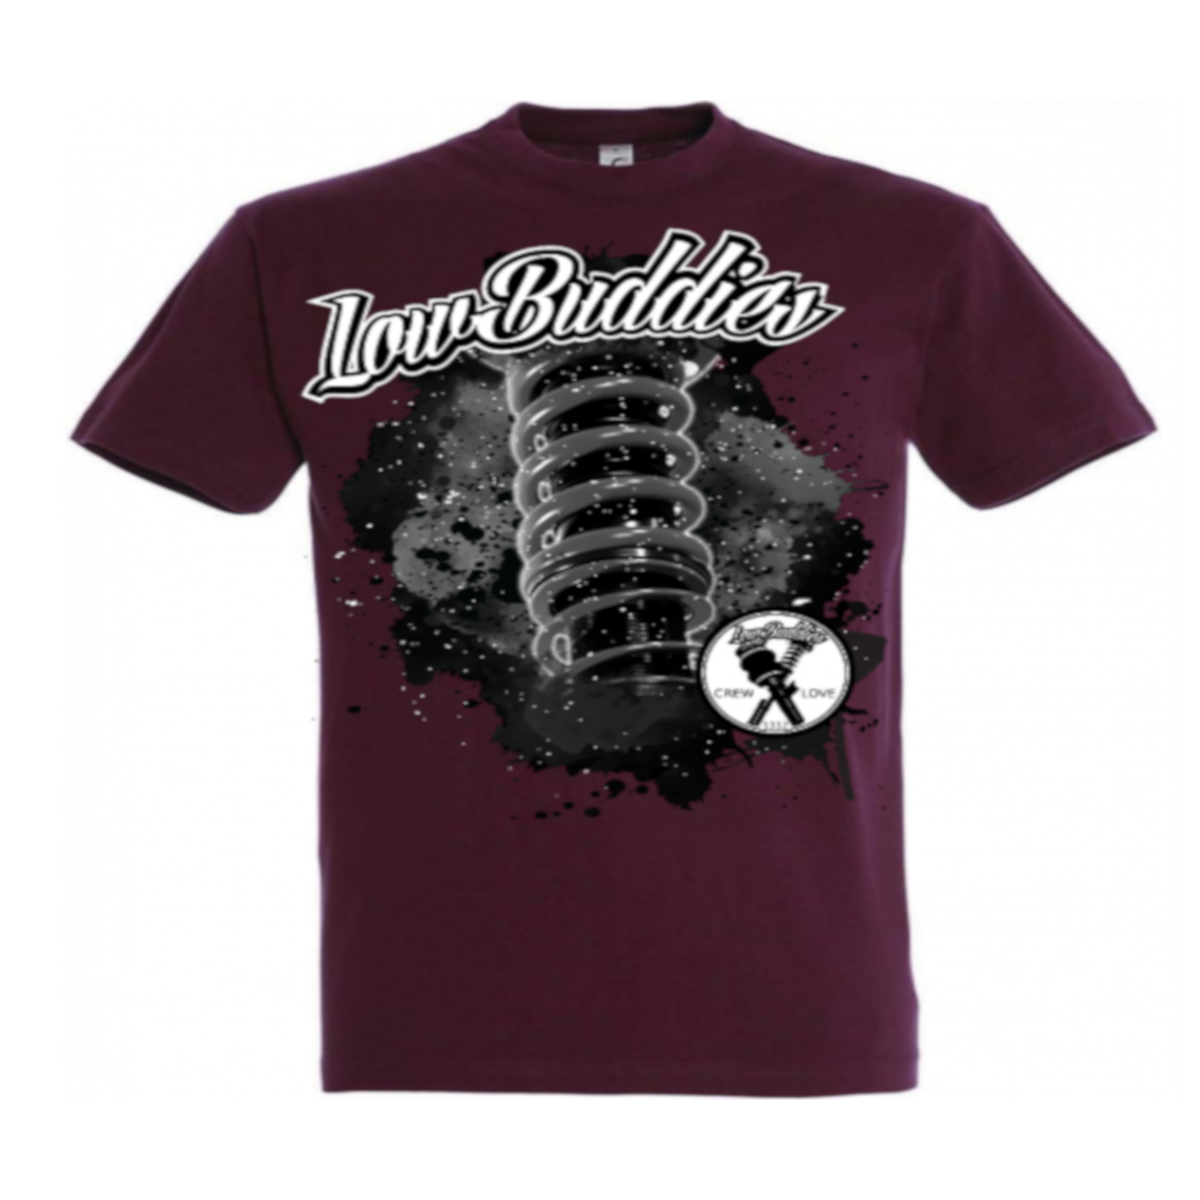 Low Buddies - Männer T-Shirt - Crewlove static - burgundy